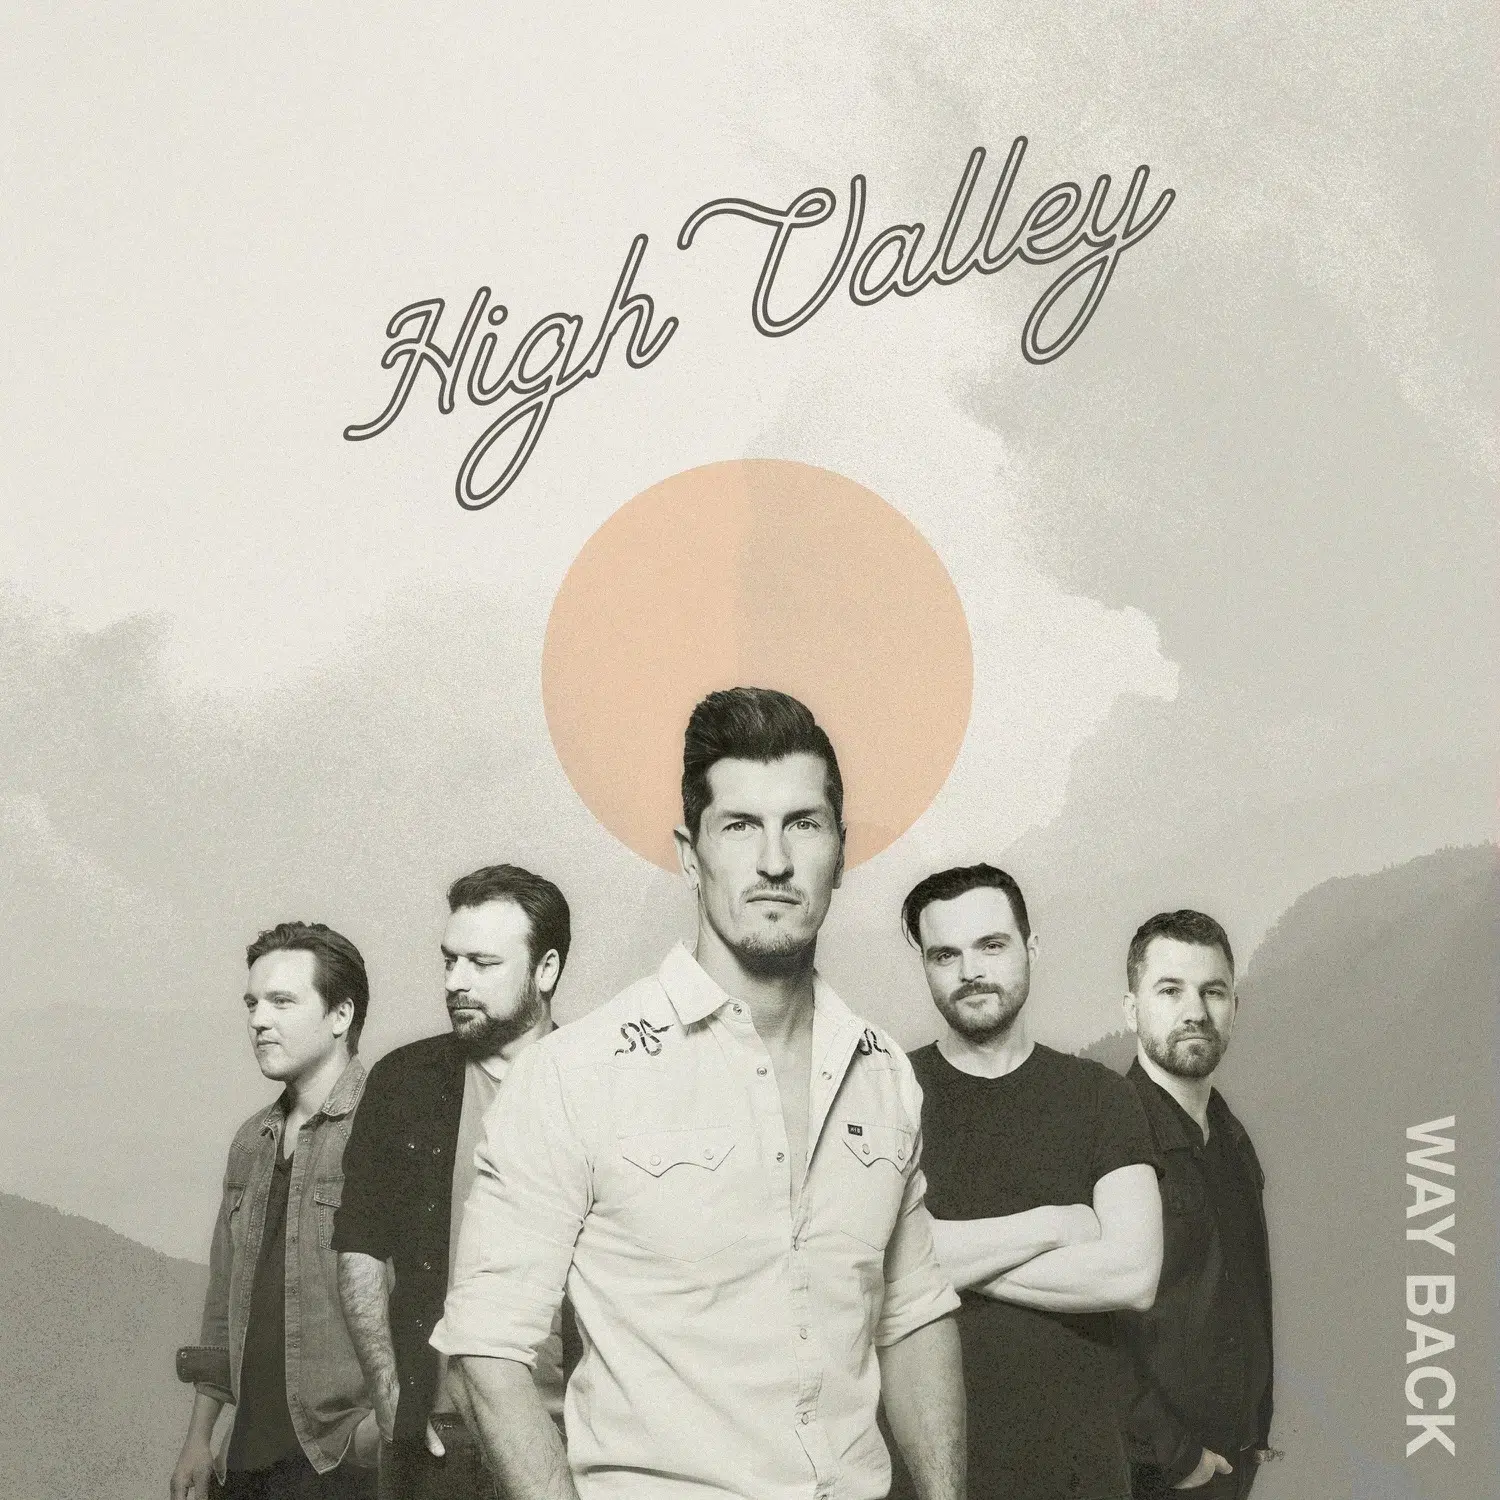 High Valley 'Way Back' - NEW ALBUM